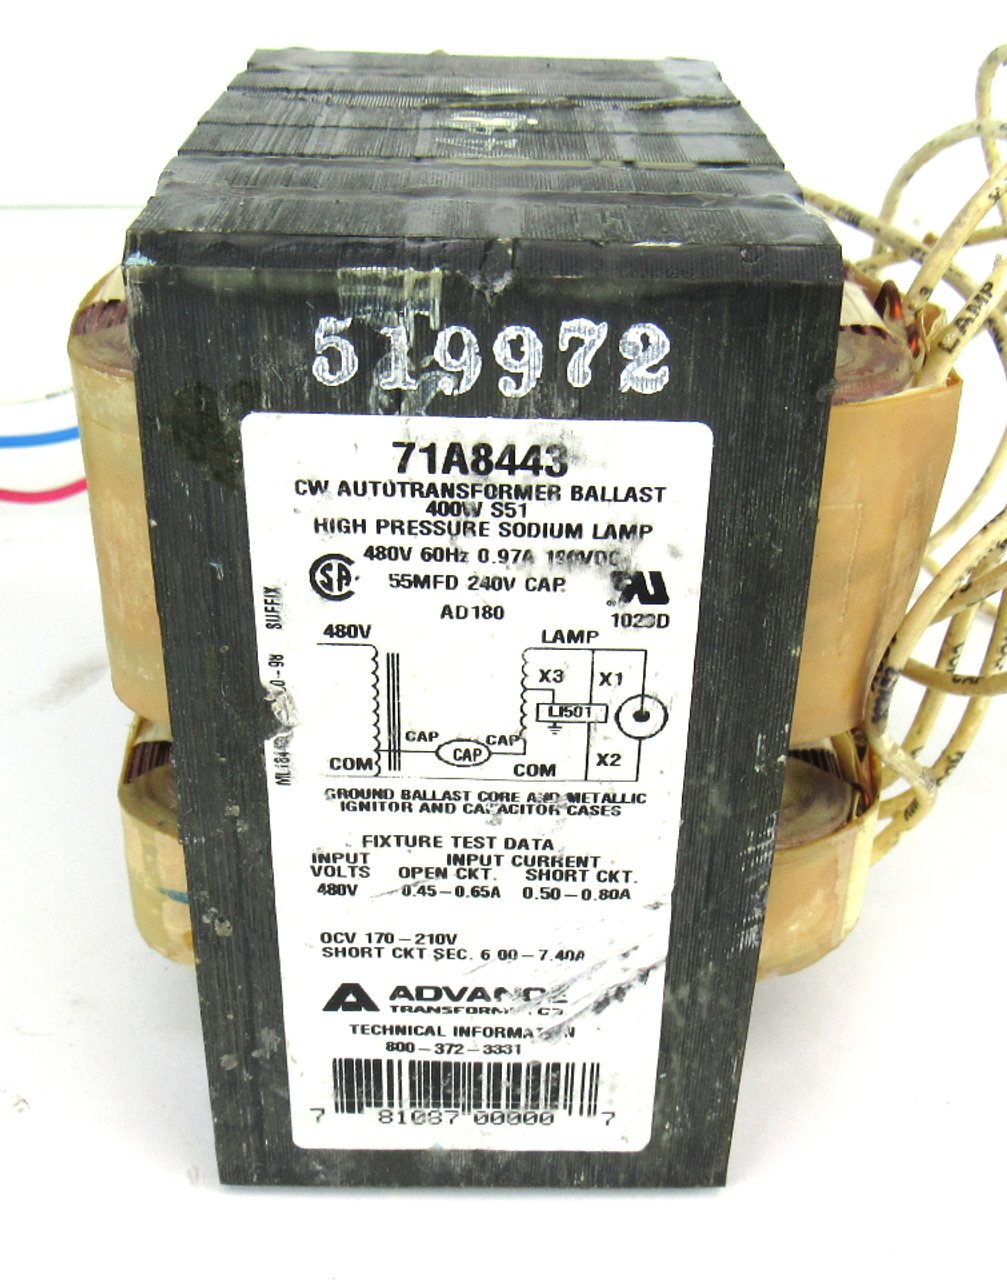 Philips Advance 71A8443-001D Core & Coil Ballast Kit, 480V, 1-400W S51 HP Sodium